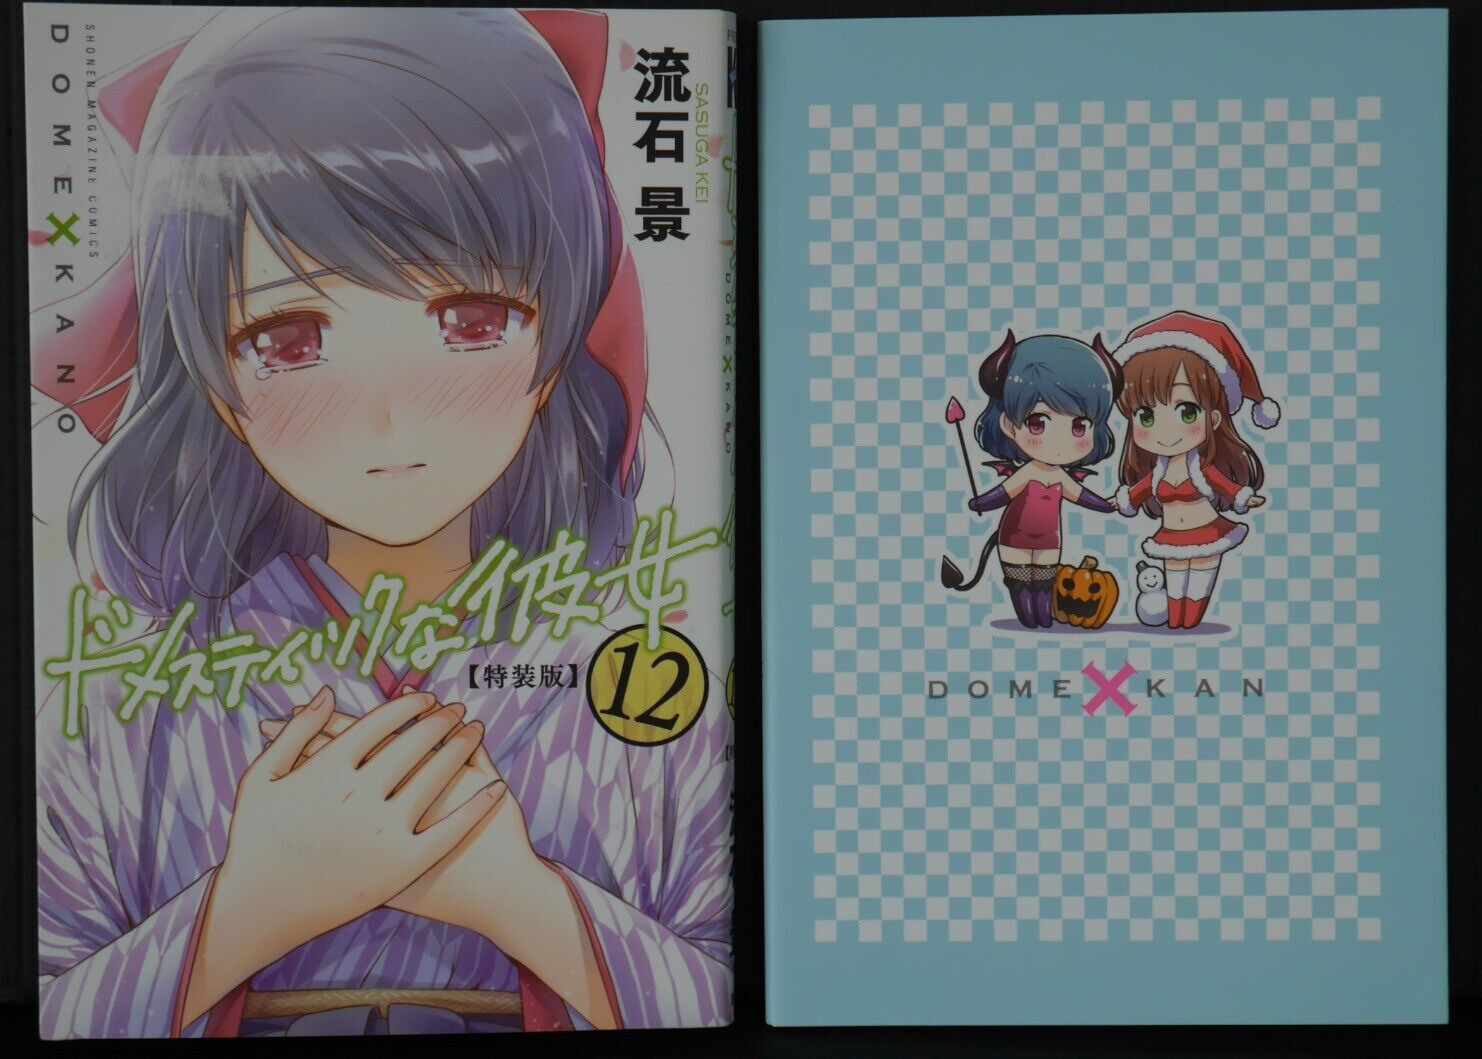 Domestic Girlfriend Vol.12 Special Manga Edition by Kei Sasuga - JAPAN